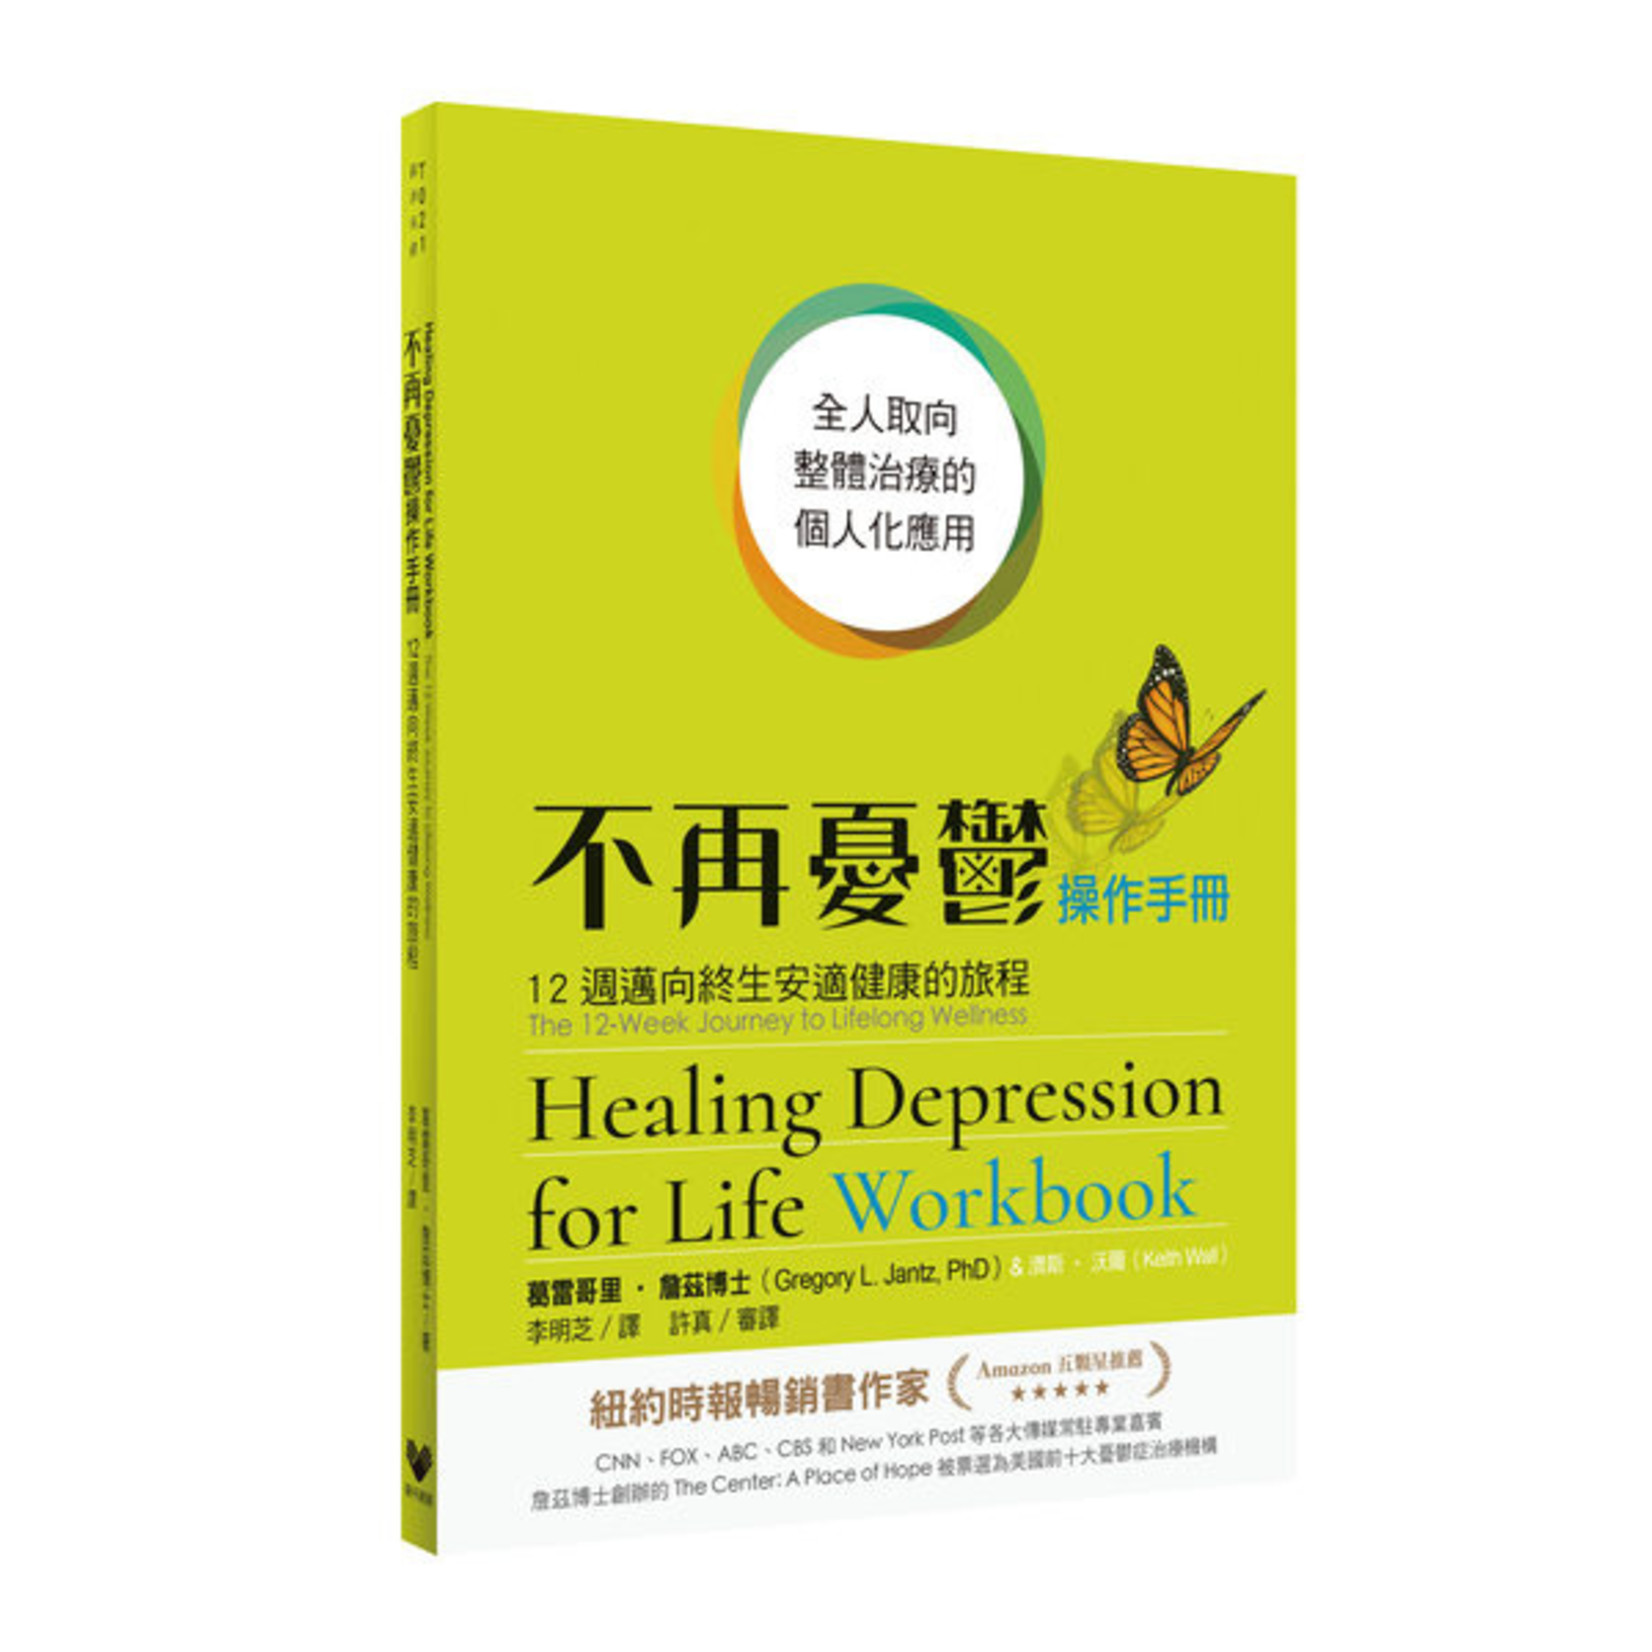 舉手網絡 LiftingHands Network 不再憂鬱操作手冊：12週邁向終生安適健康的旅程 | Healing Depression for Life Workbook: The 12-Week Journey to Lifelong Wellness